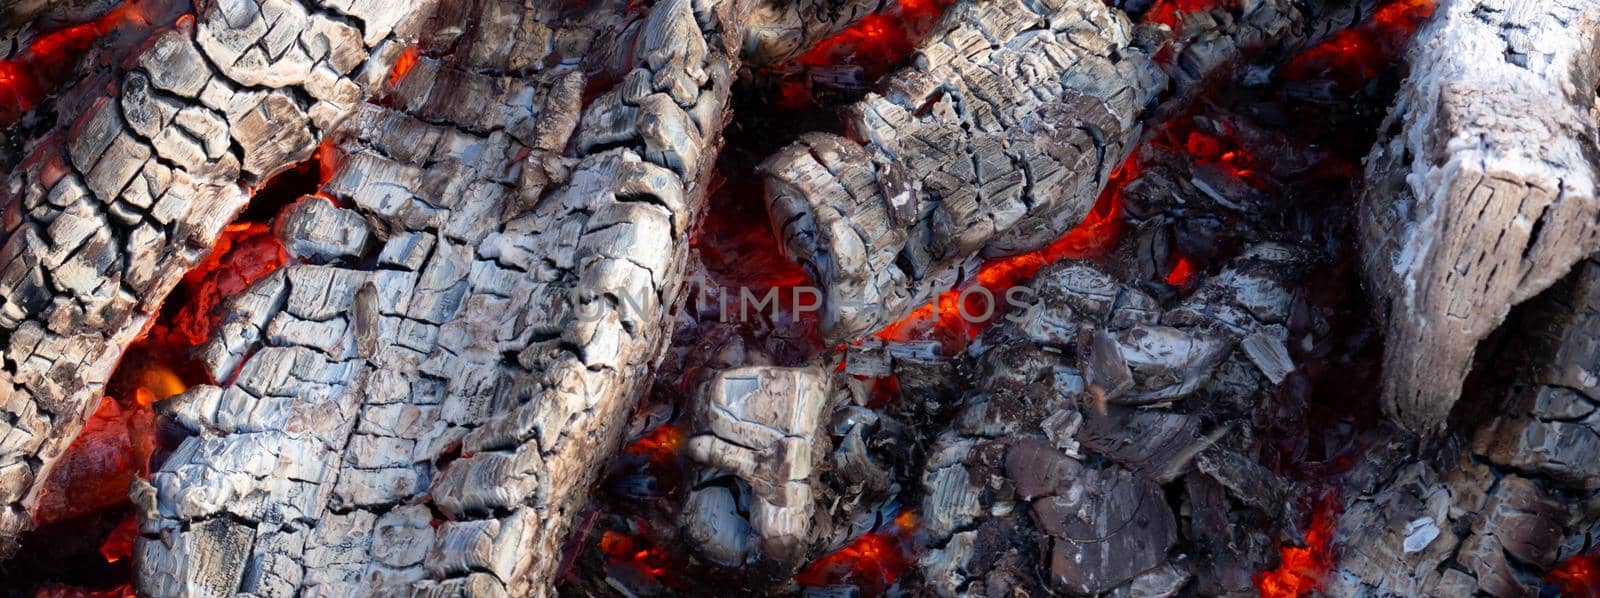 Glowing red hot charcoal. Beautiful charcoal background by lapushka62